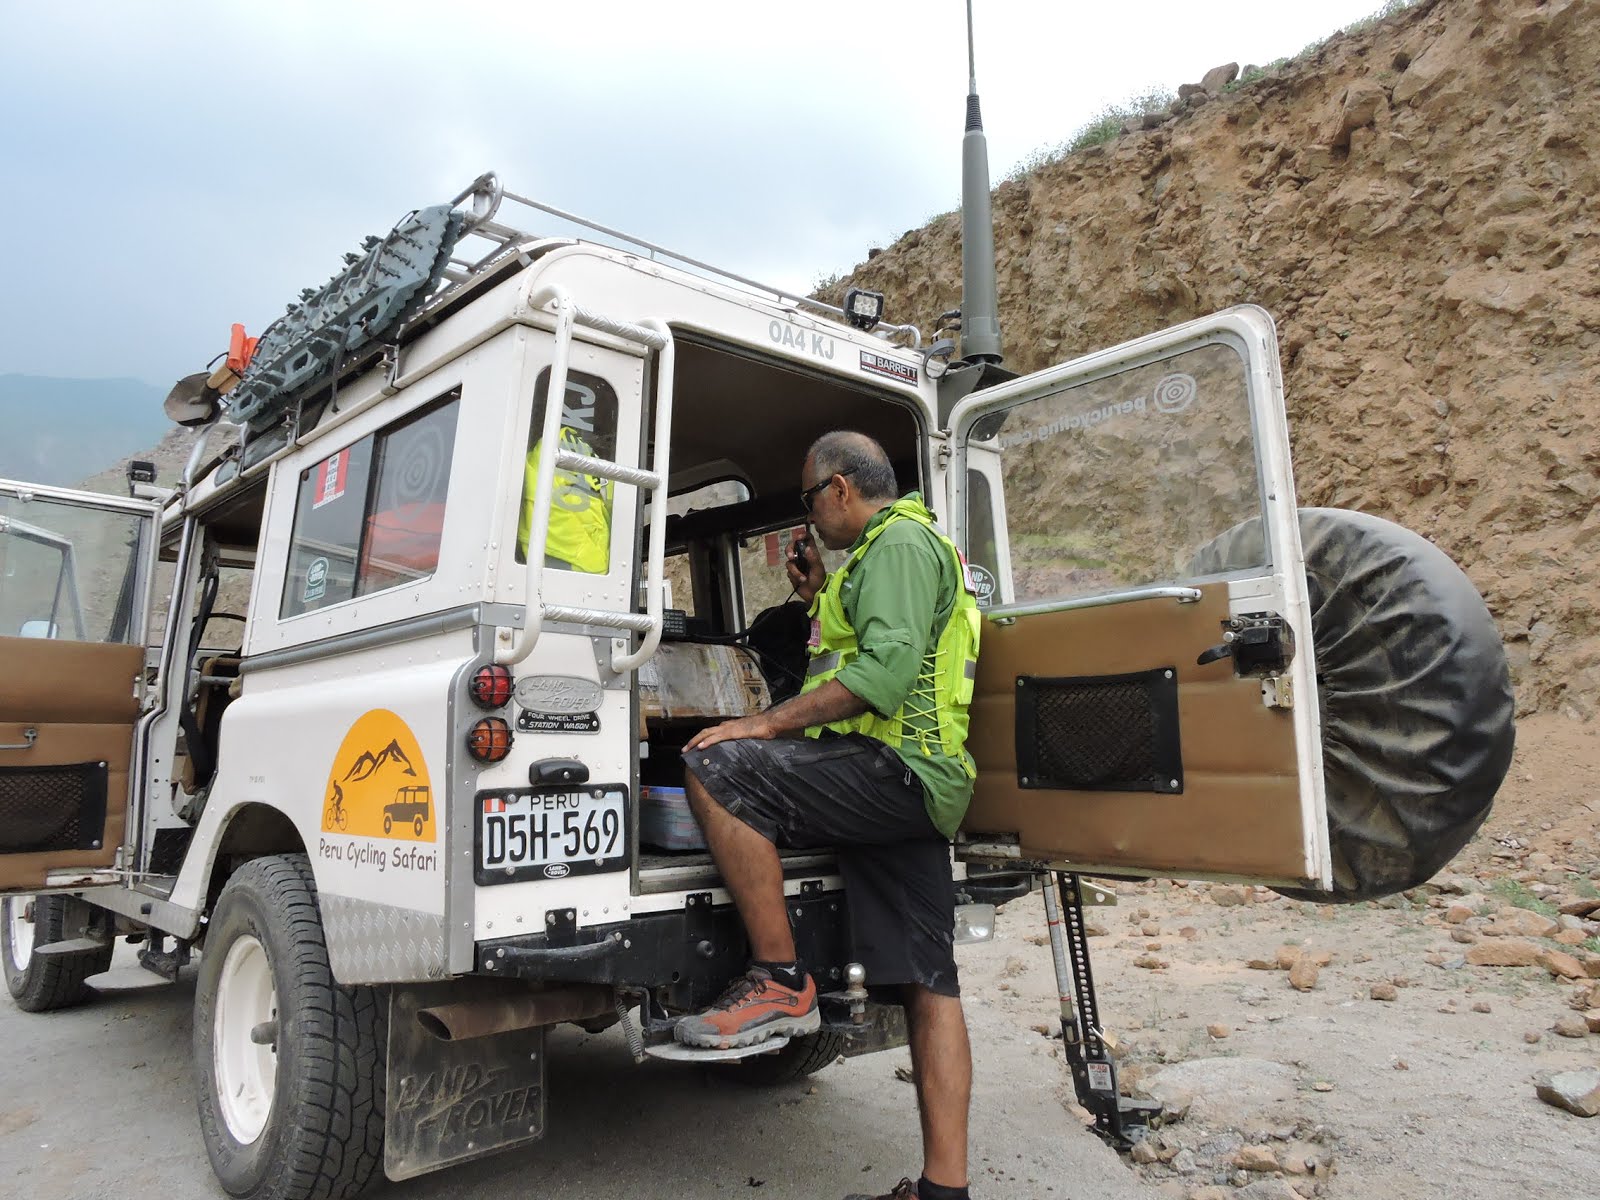 HF Radio assisting disaster relief in Peru